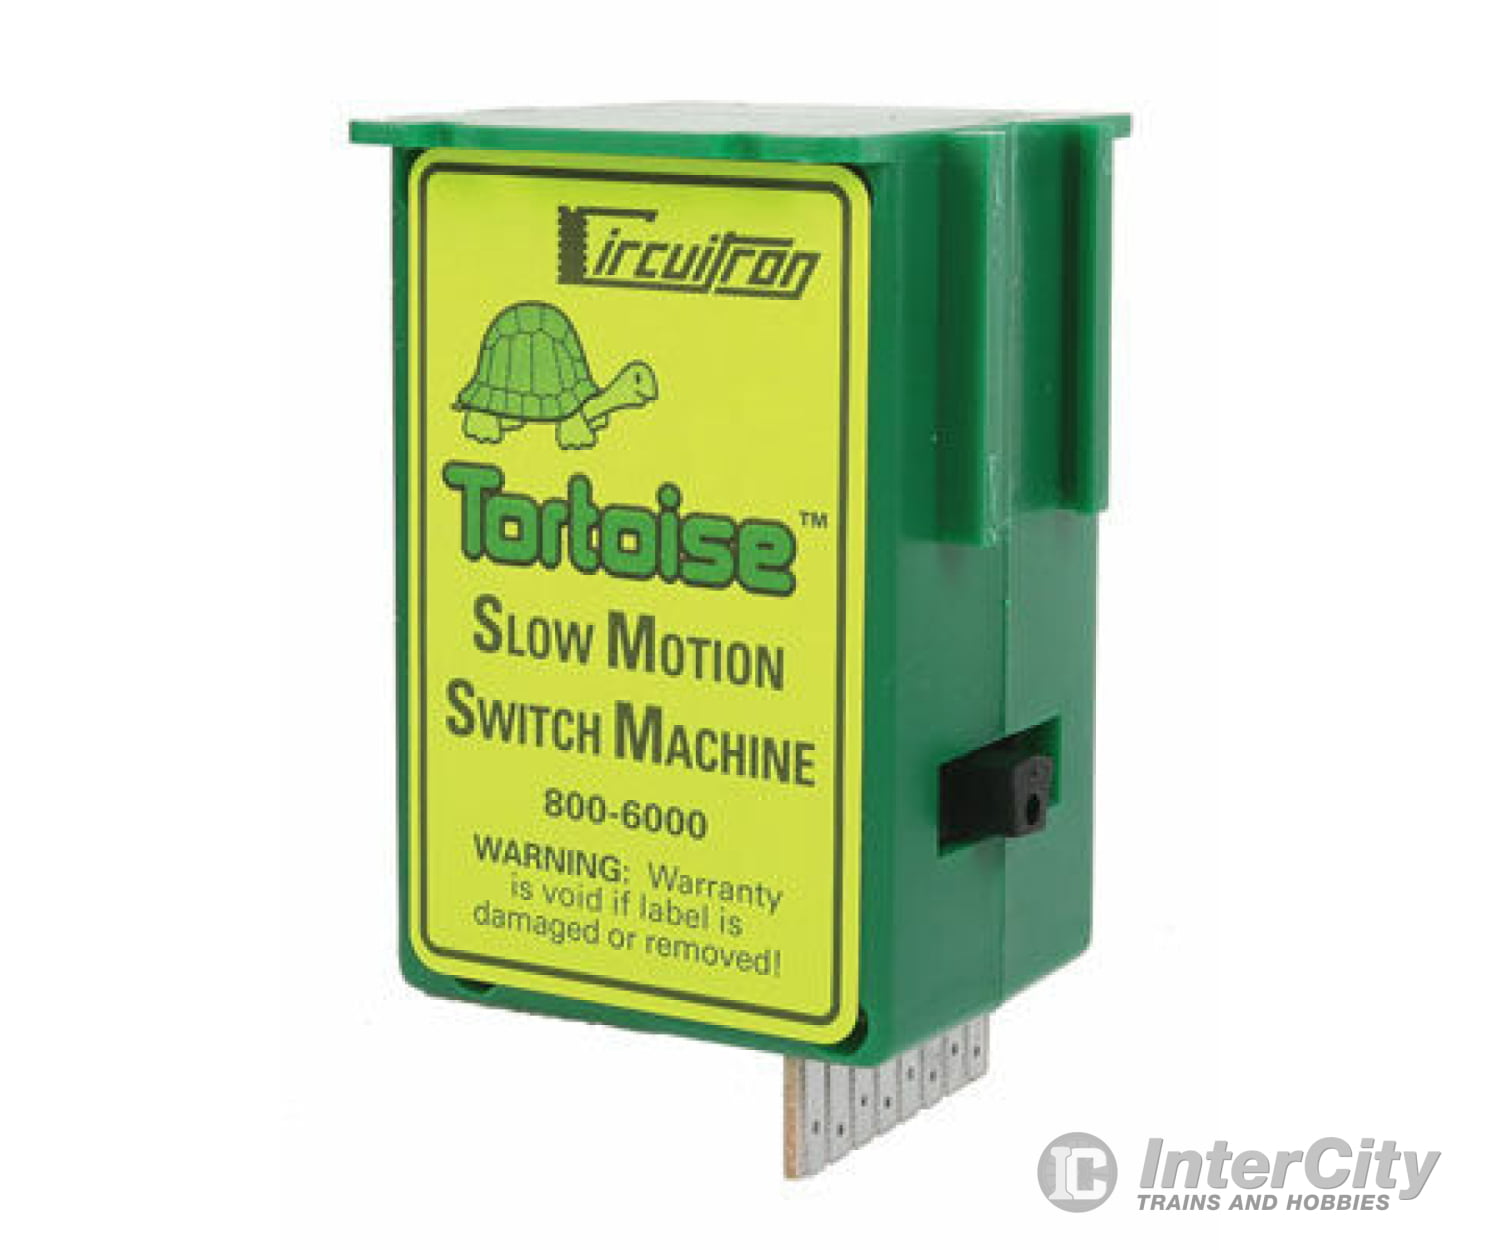 Circuitron 6000 The Tortoise(Tm) Switch Machine Track Accessories